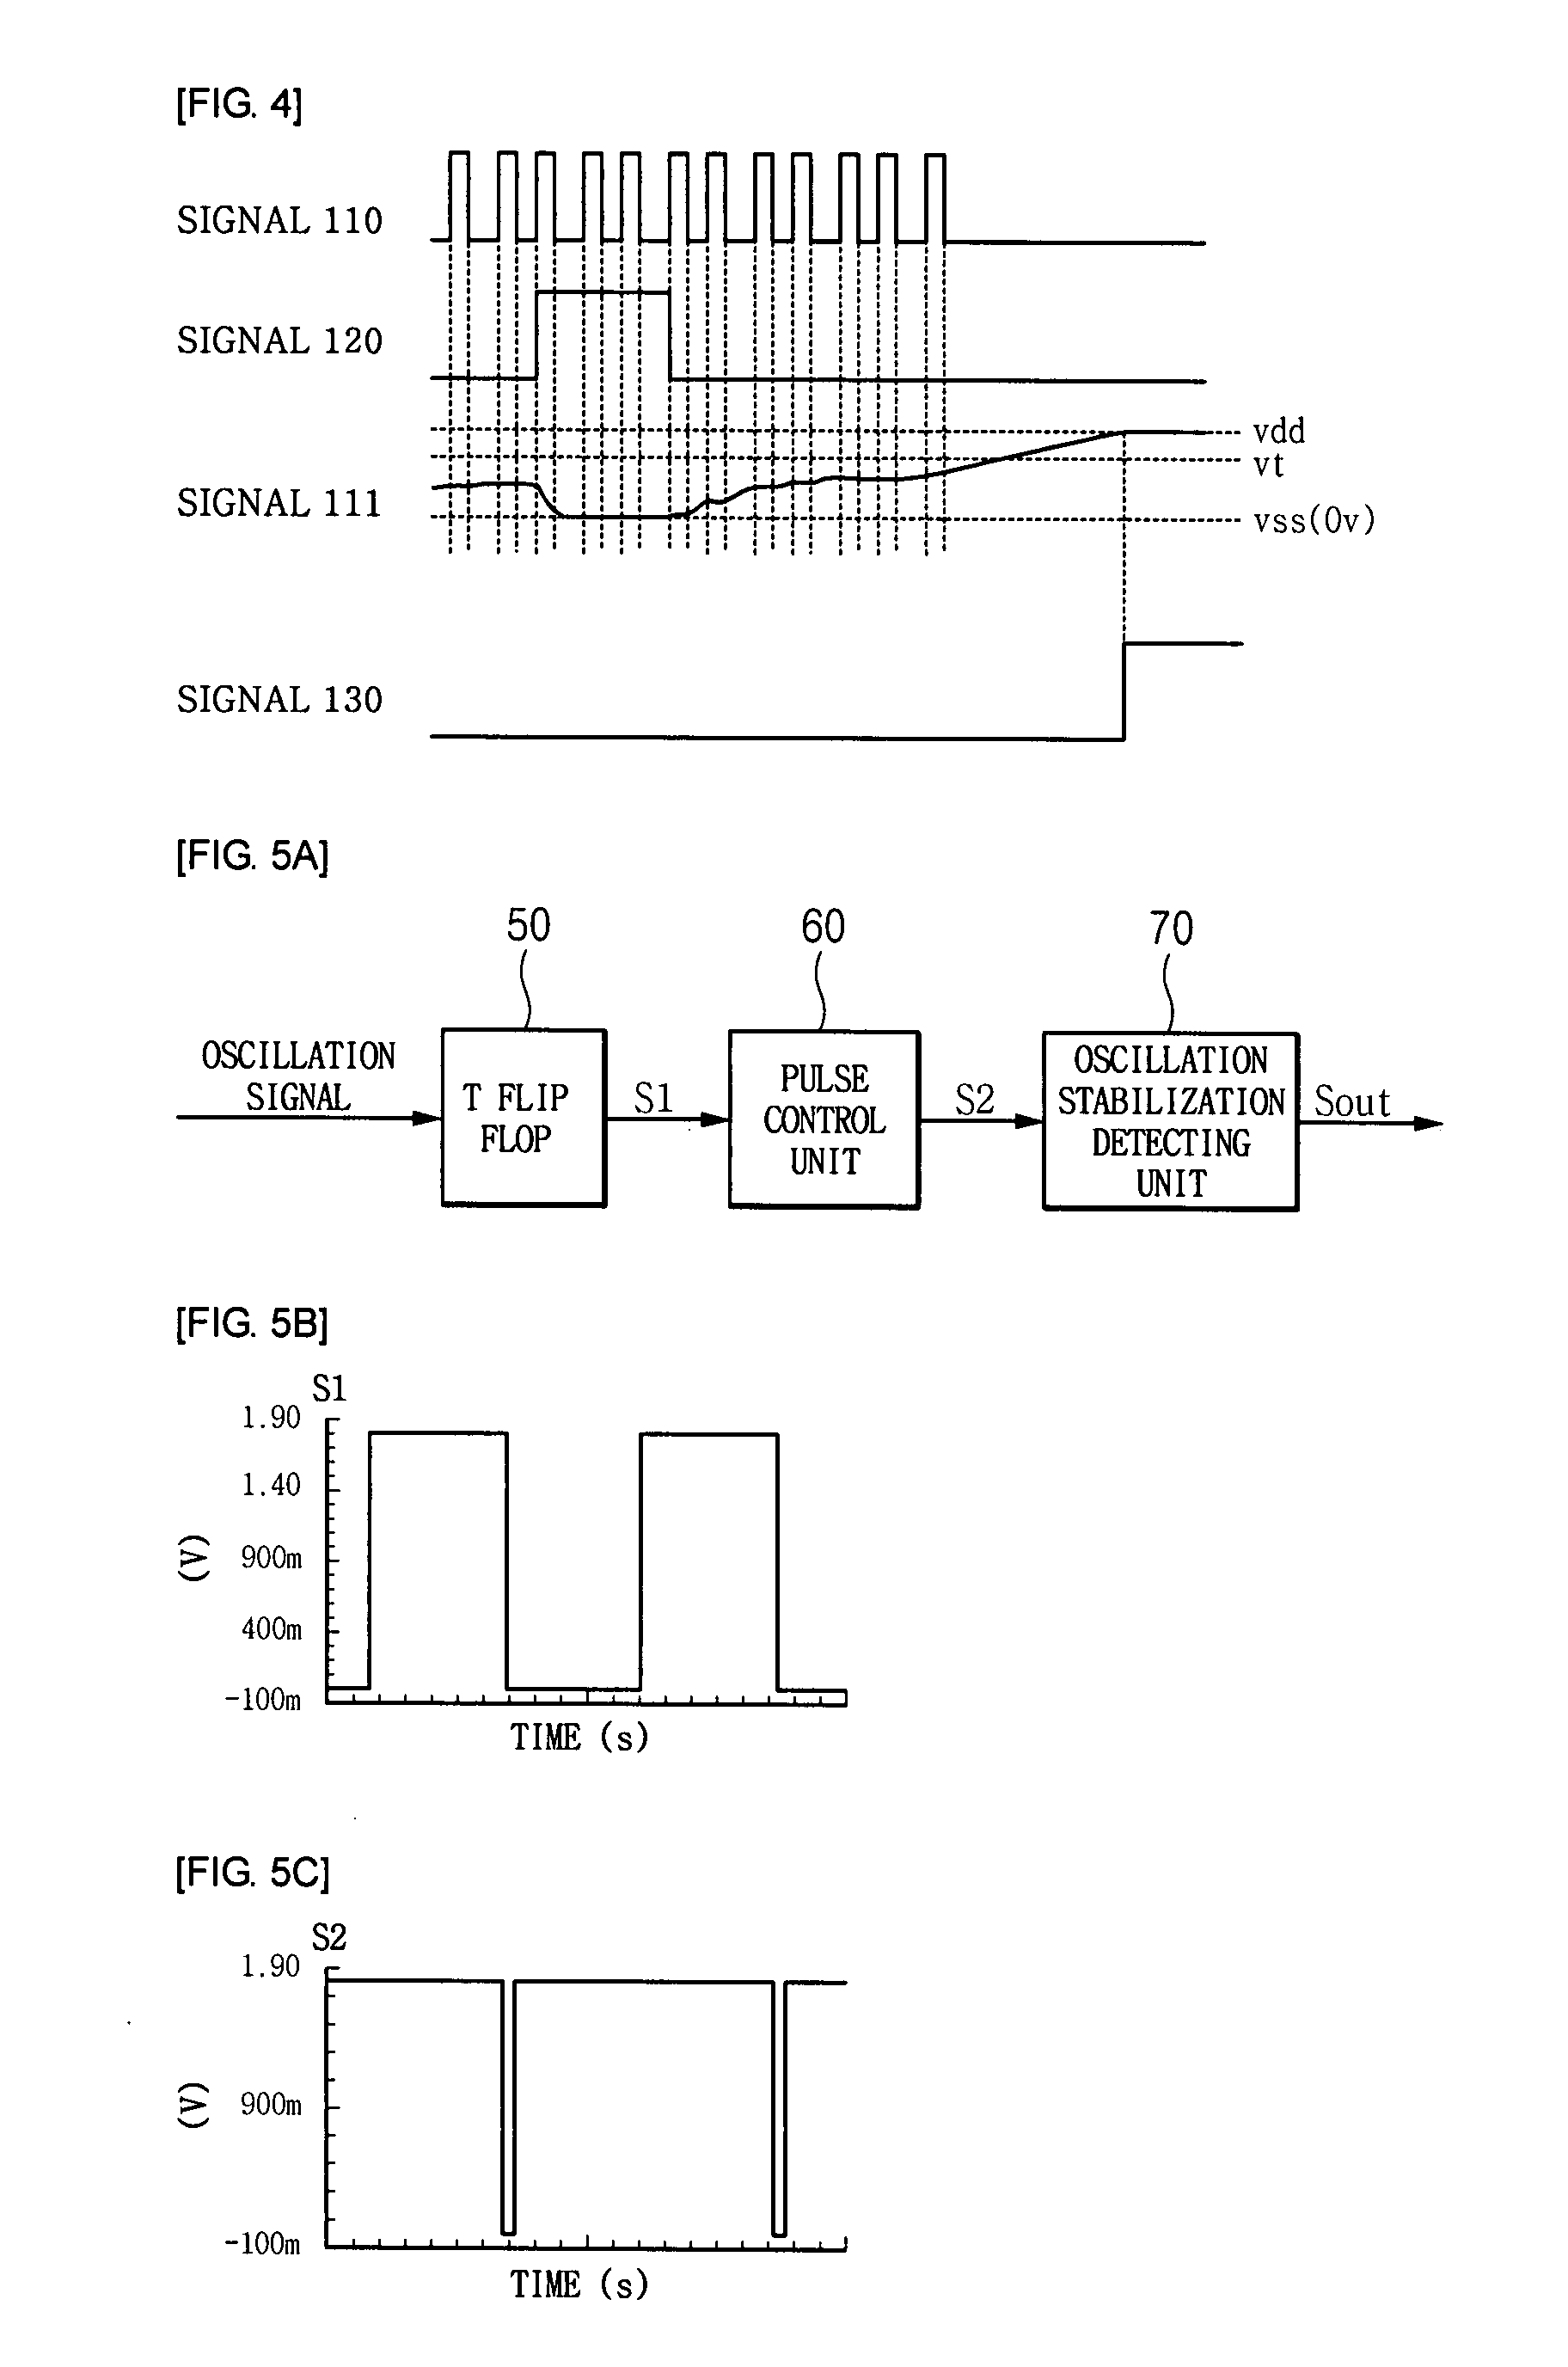 Oscillation stabilization circuit